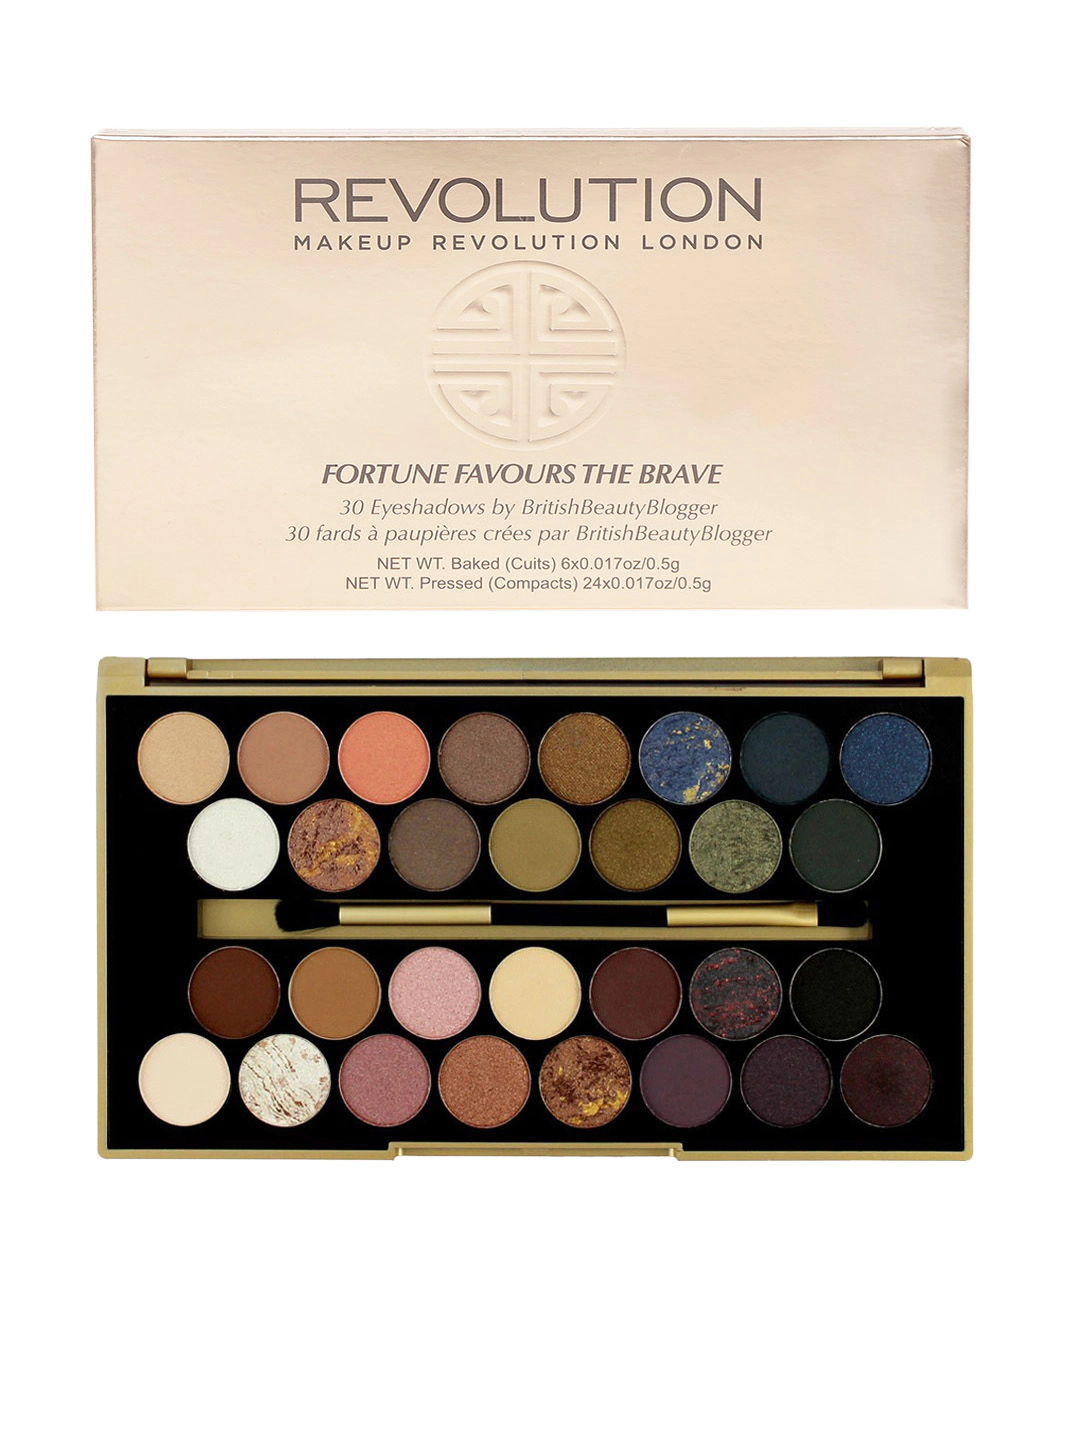 11521114250392-Makeup-Revolution-London-Eye-Shadow-Palette-2381521114250314-1